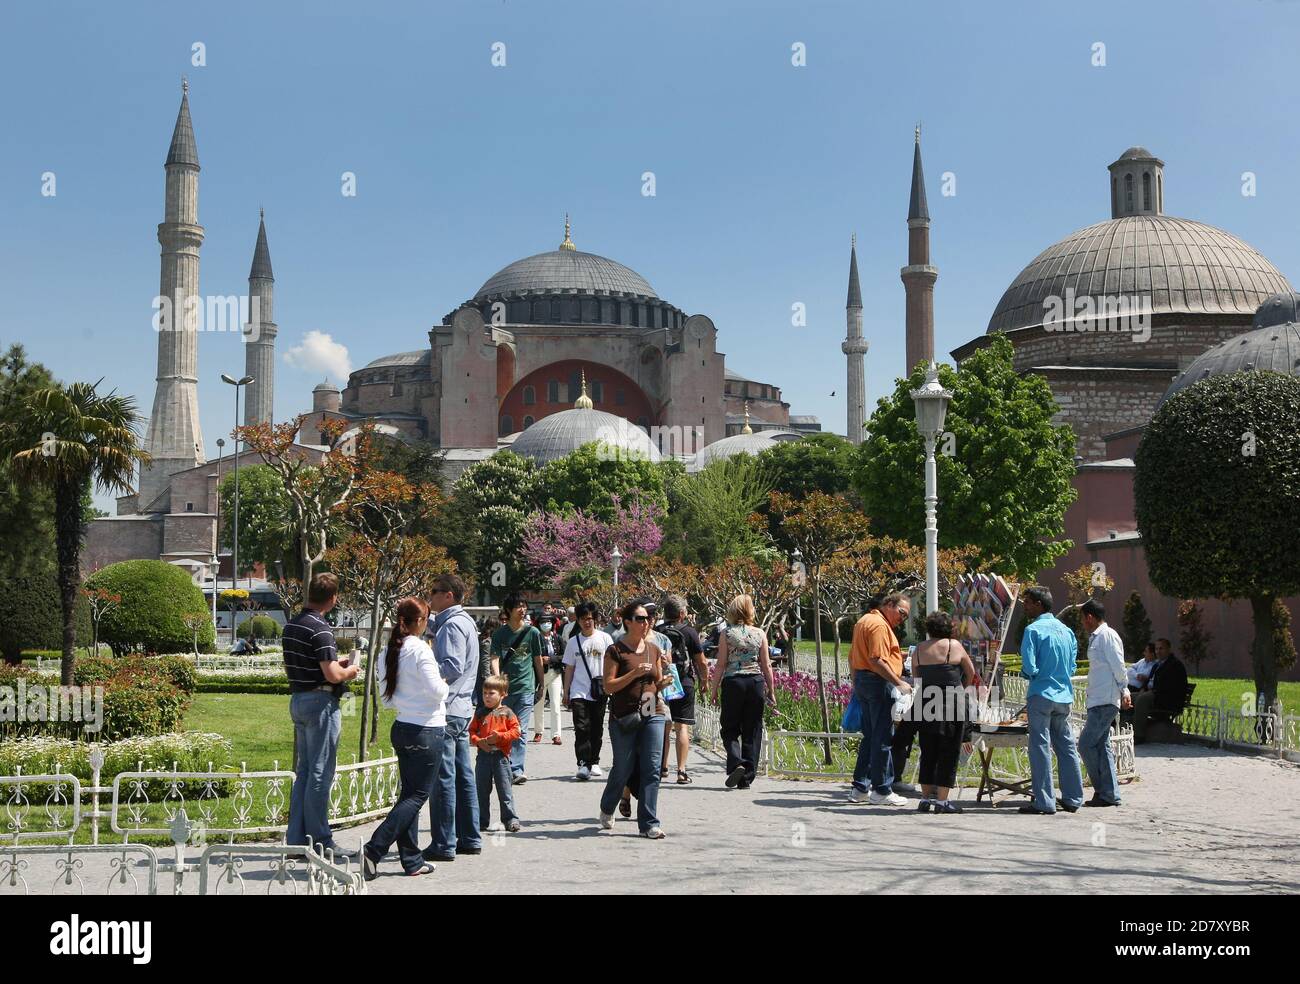 La magnifica Aya Sofya, l'ex basilica di Hagia Sophia di Costantinopoli vista dal Parco Sultanahmet di Istanbul in Turchia. Foto Stock